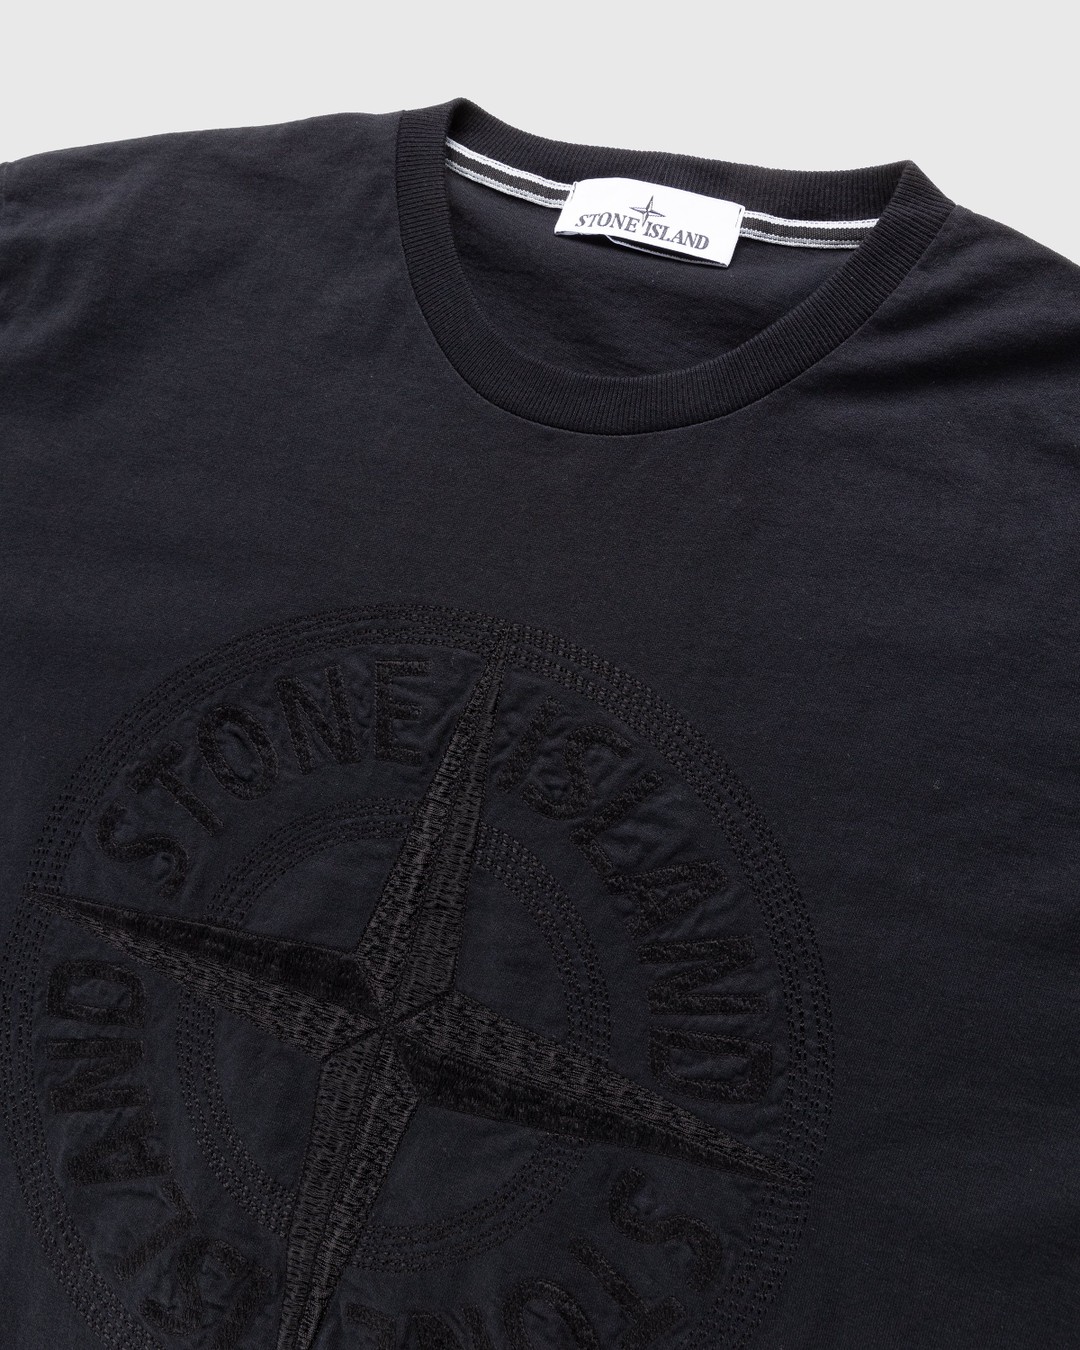 Stone Island – Compass Logo T-Shirt Black - T-shirts - Black - Image 4